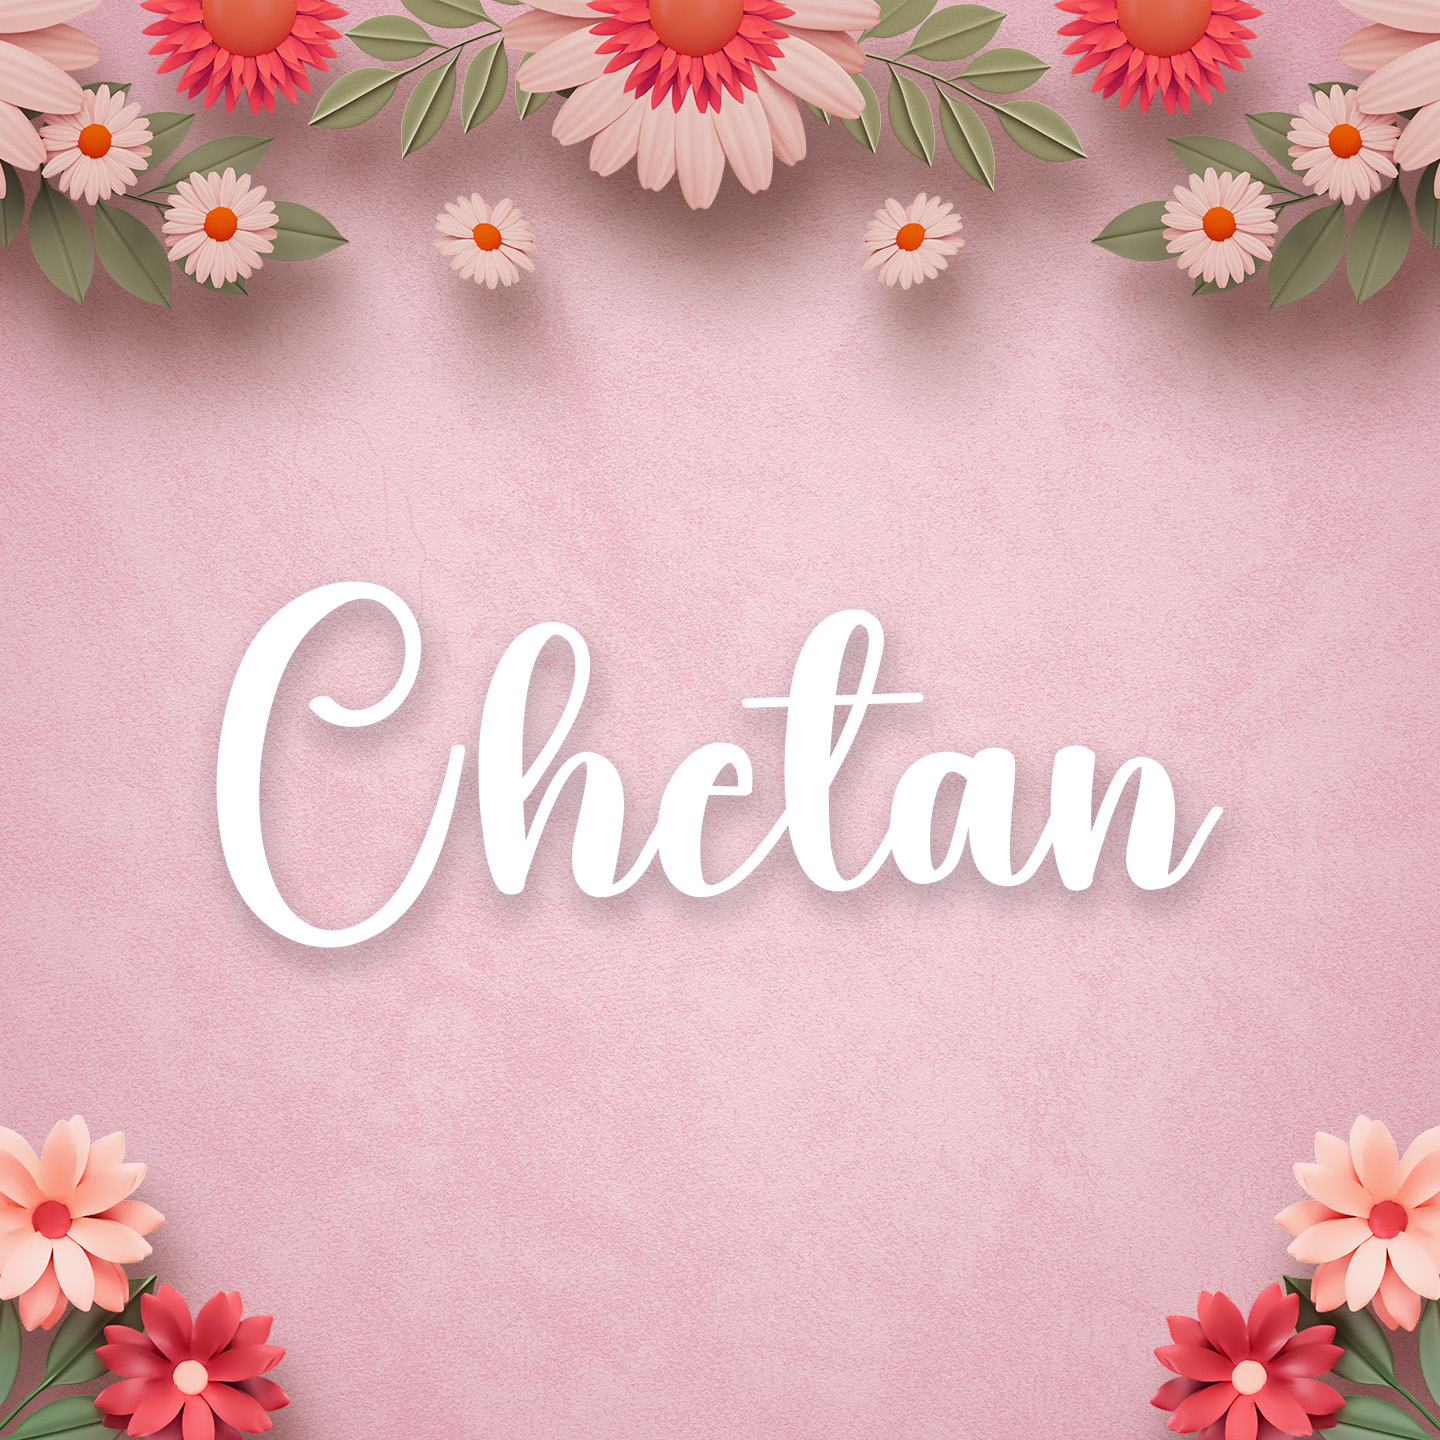 Chudasma chetan (chudasmachetan79) - Profile | Pinterest